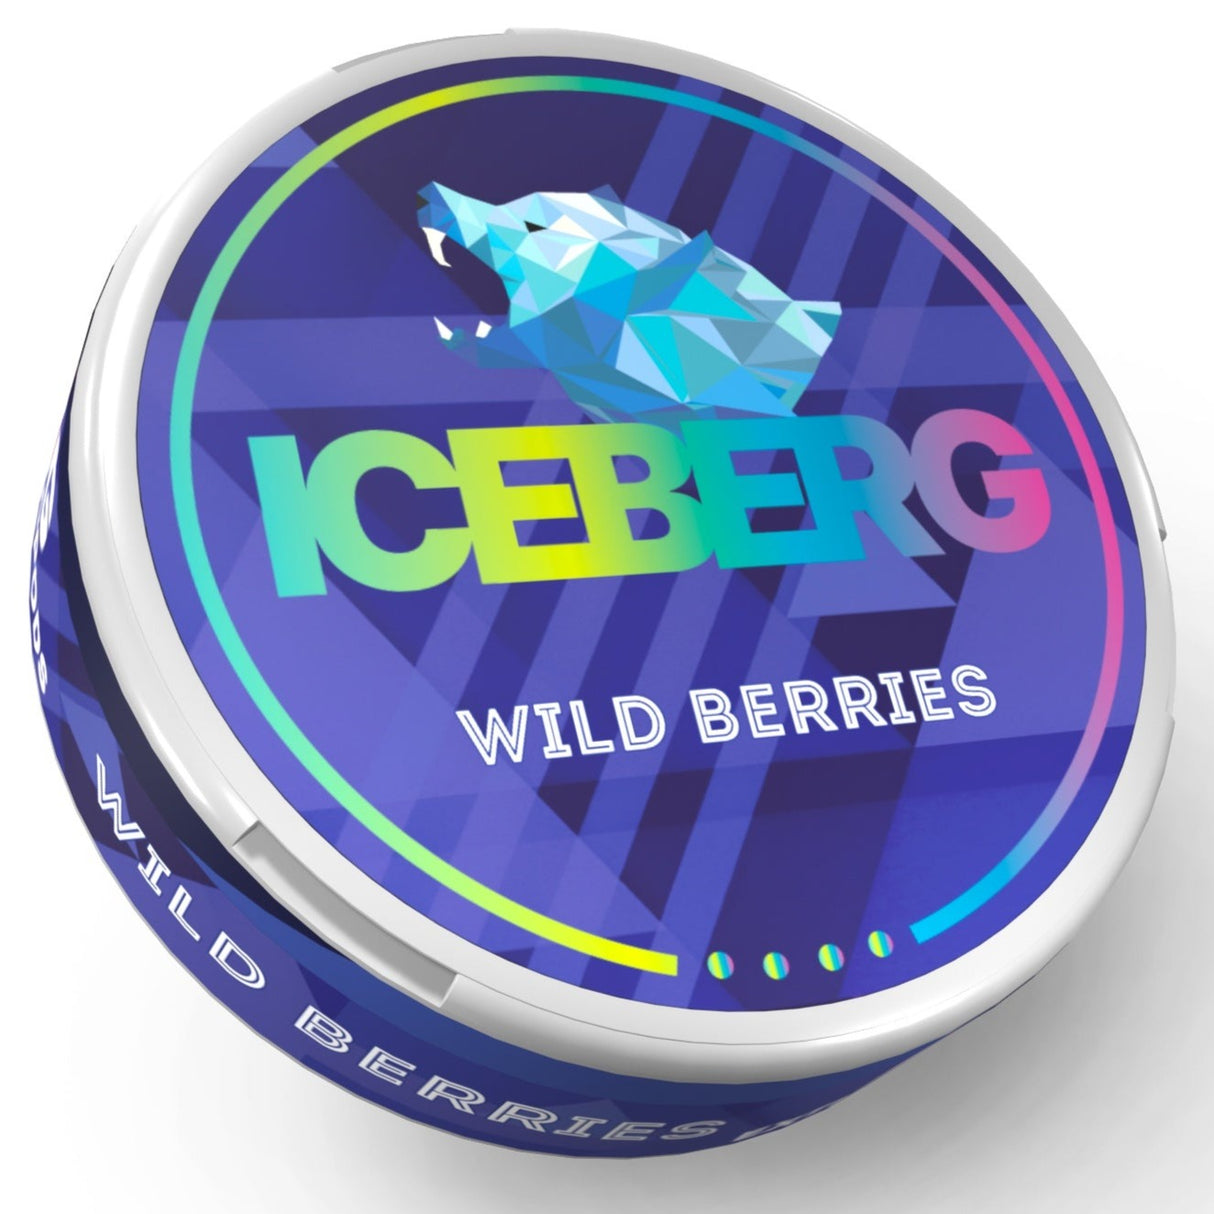 Wild Berries Nicotine Pouches By Iceberg